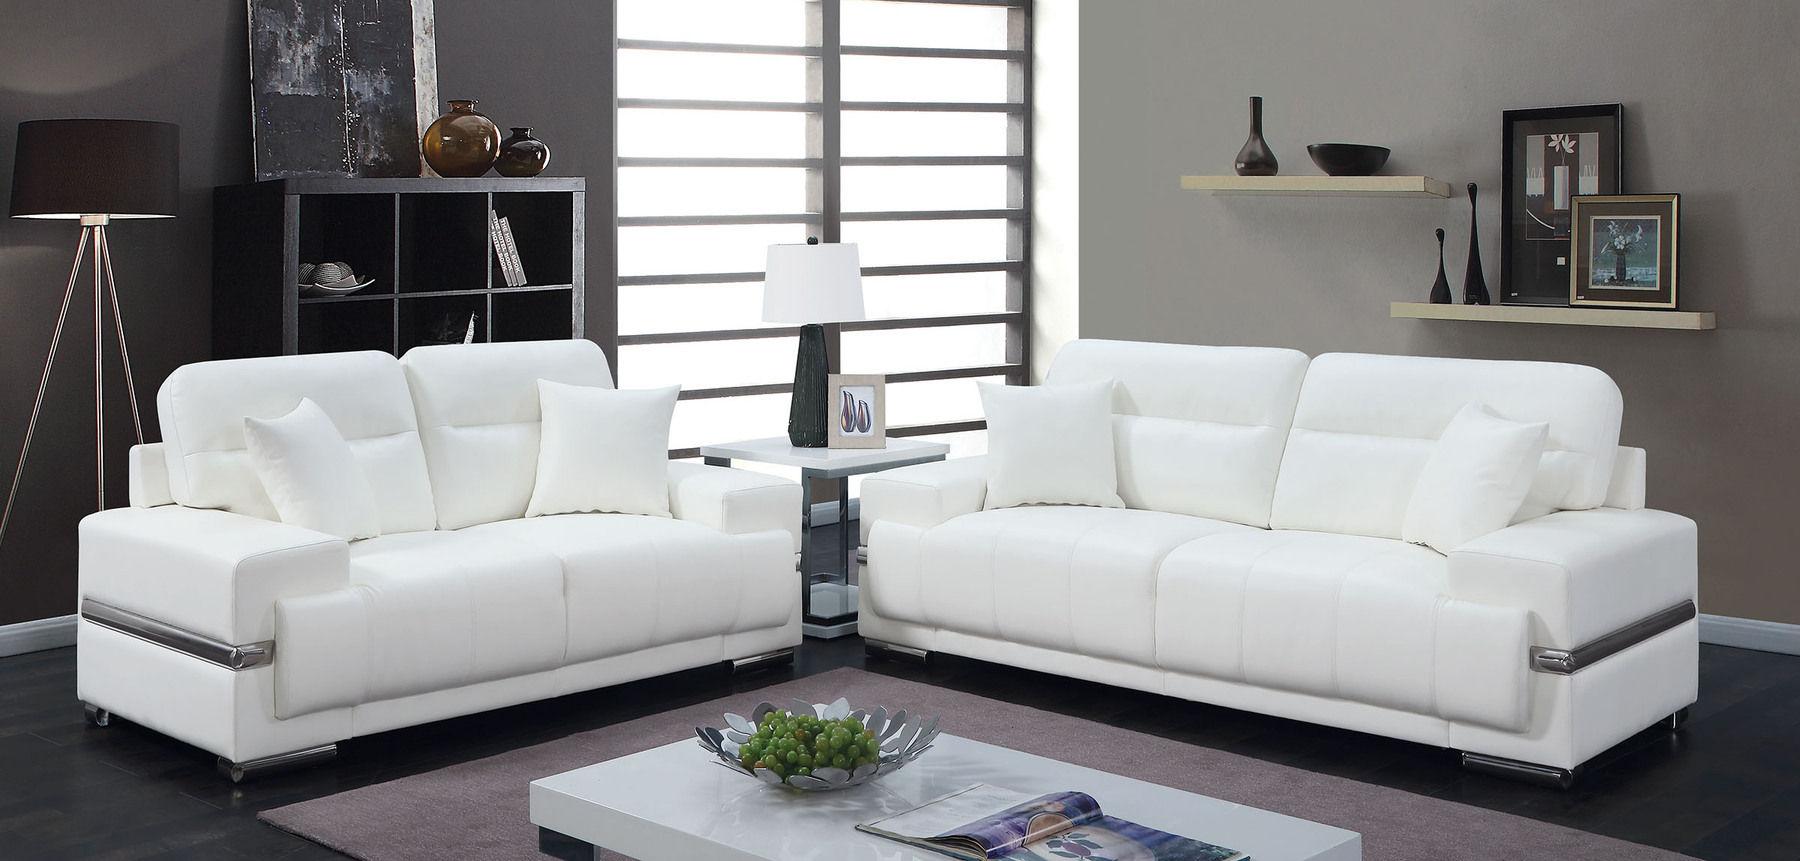 Contemporary Sofa and Loveseat Set CM6411WH-2PC Zibak CM6411WH-2PC in White Breathable Leathrette